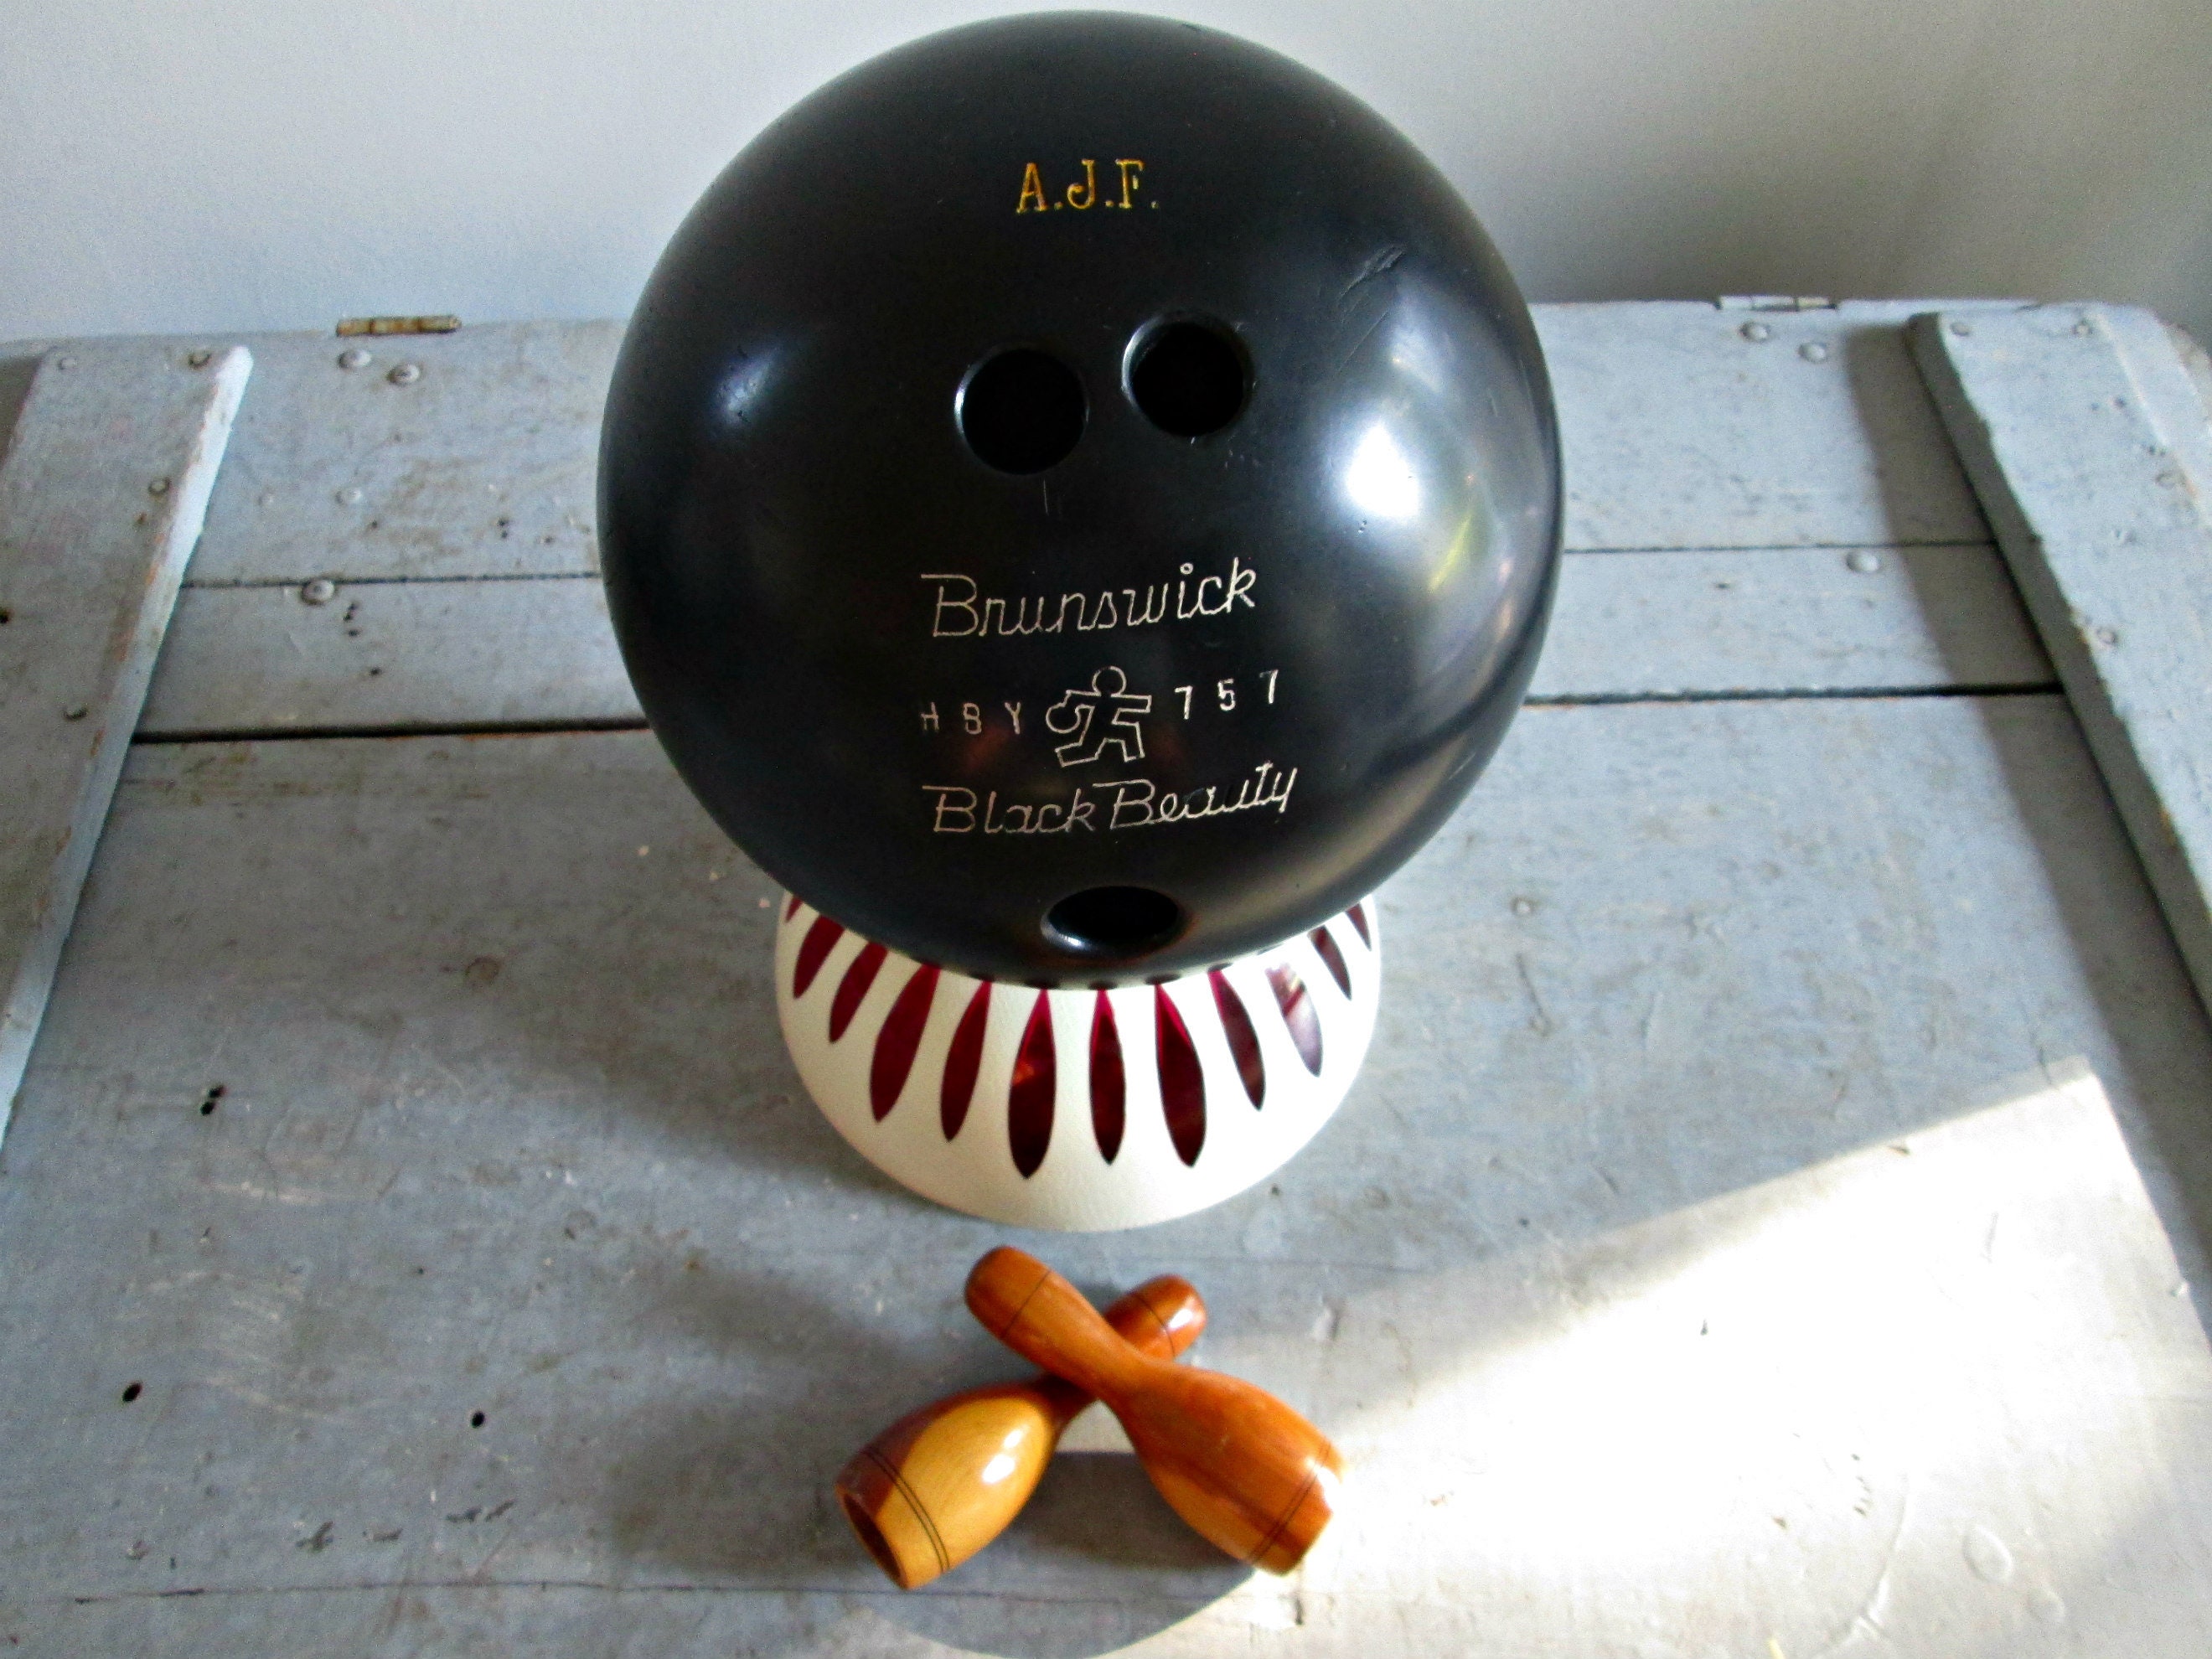 Brunswick Bowling Ball (15 lbs) Vintage Collectible Custom Ltd